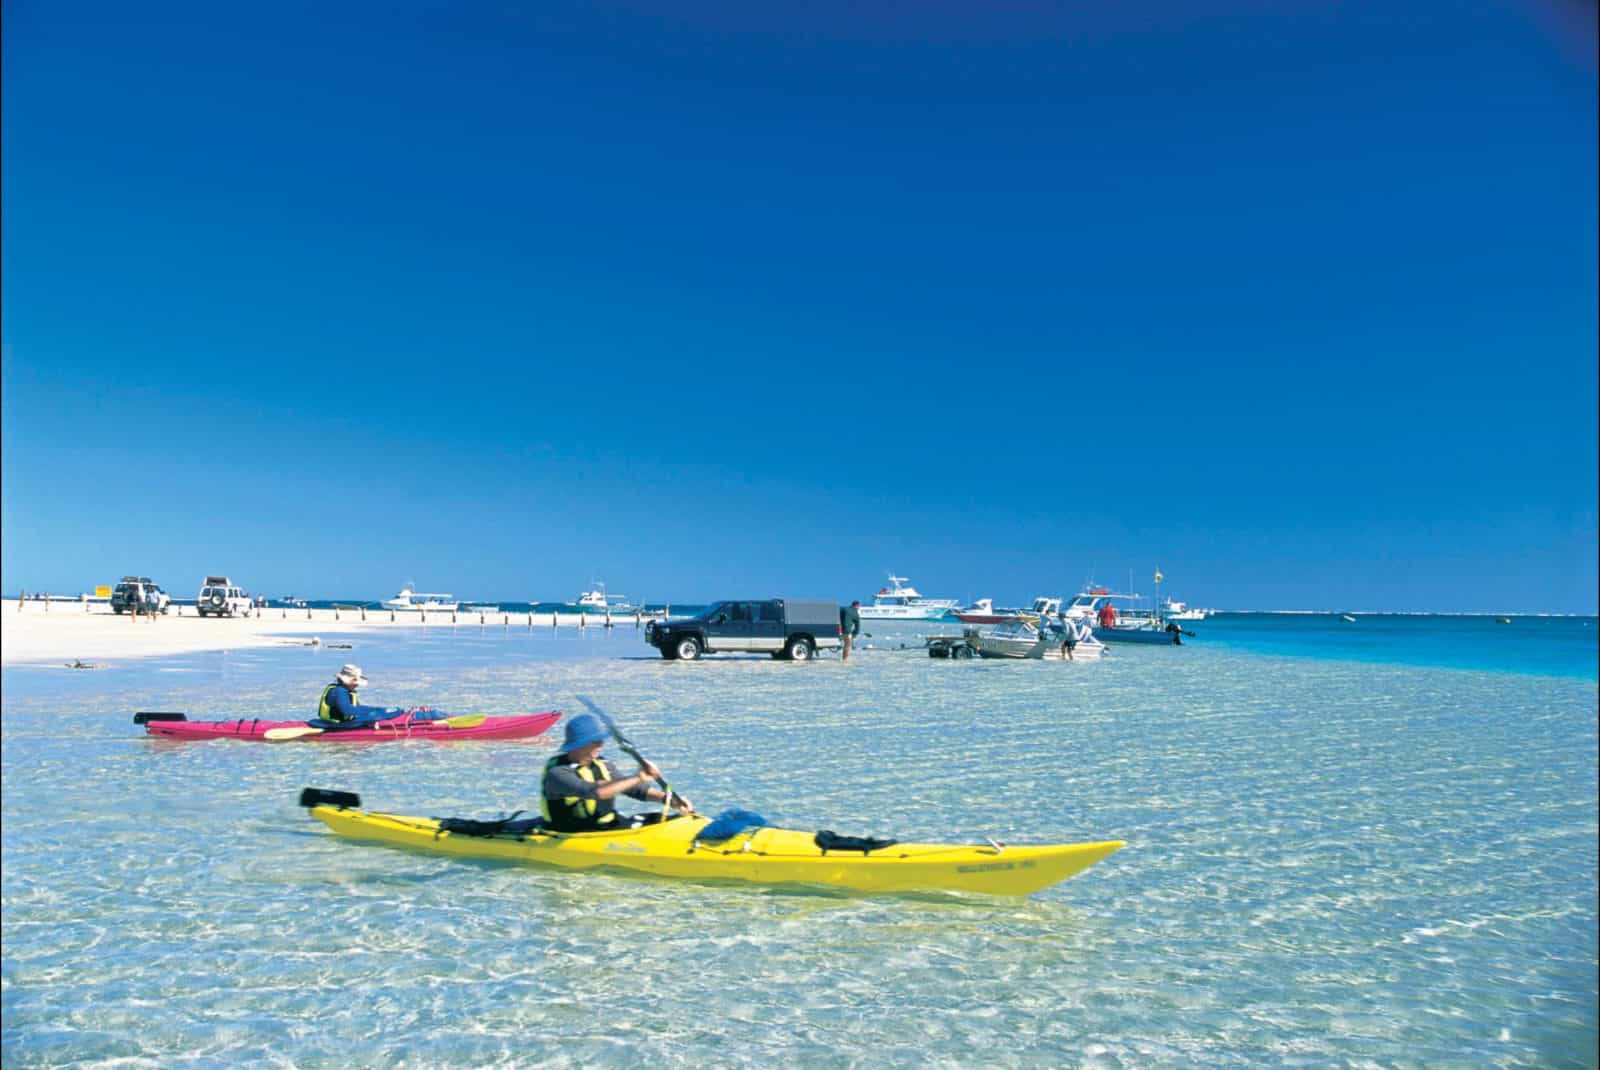 Bill's Bay, Coral Bay, Western Australia